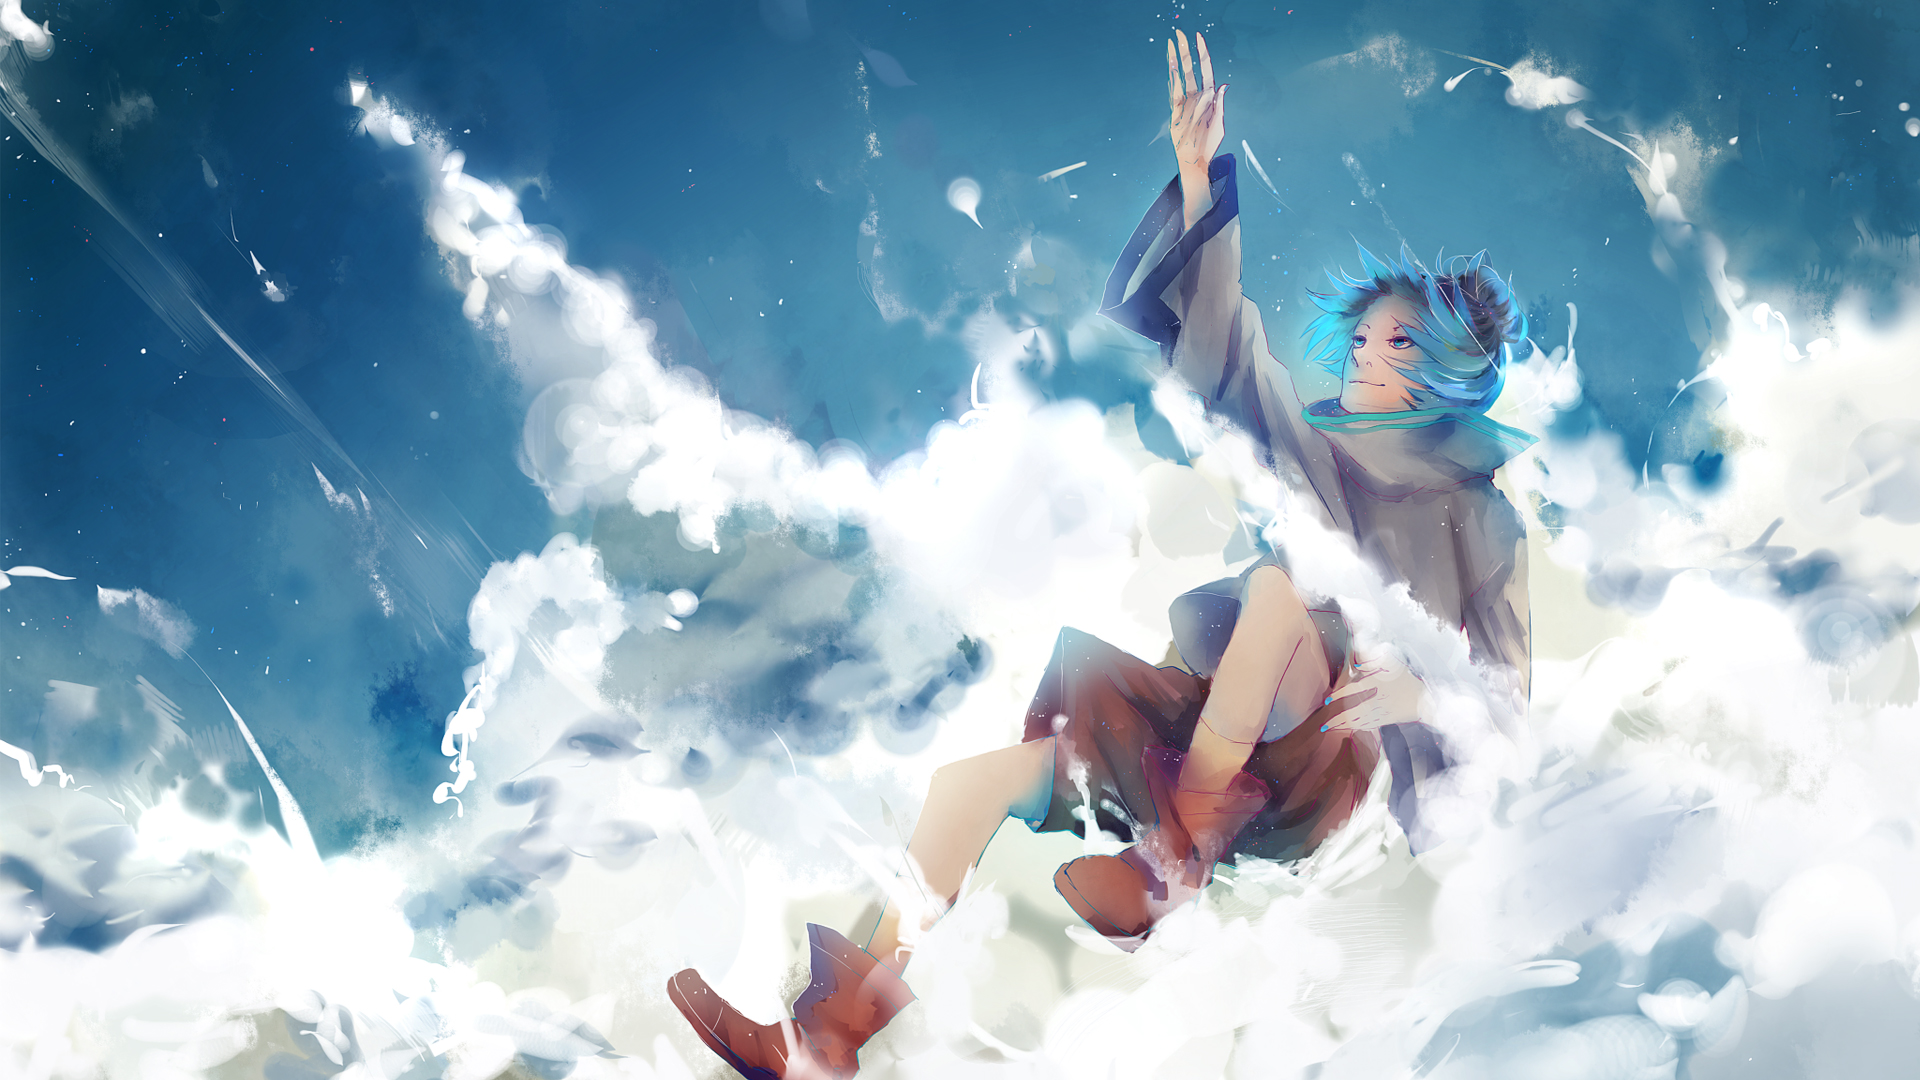 Ocean of Clouds by YuruiKarameru